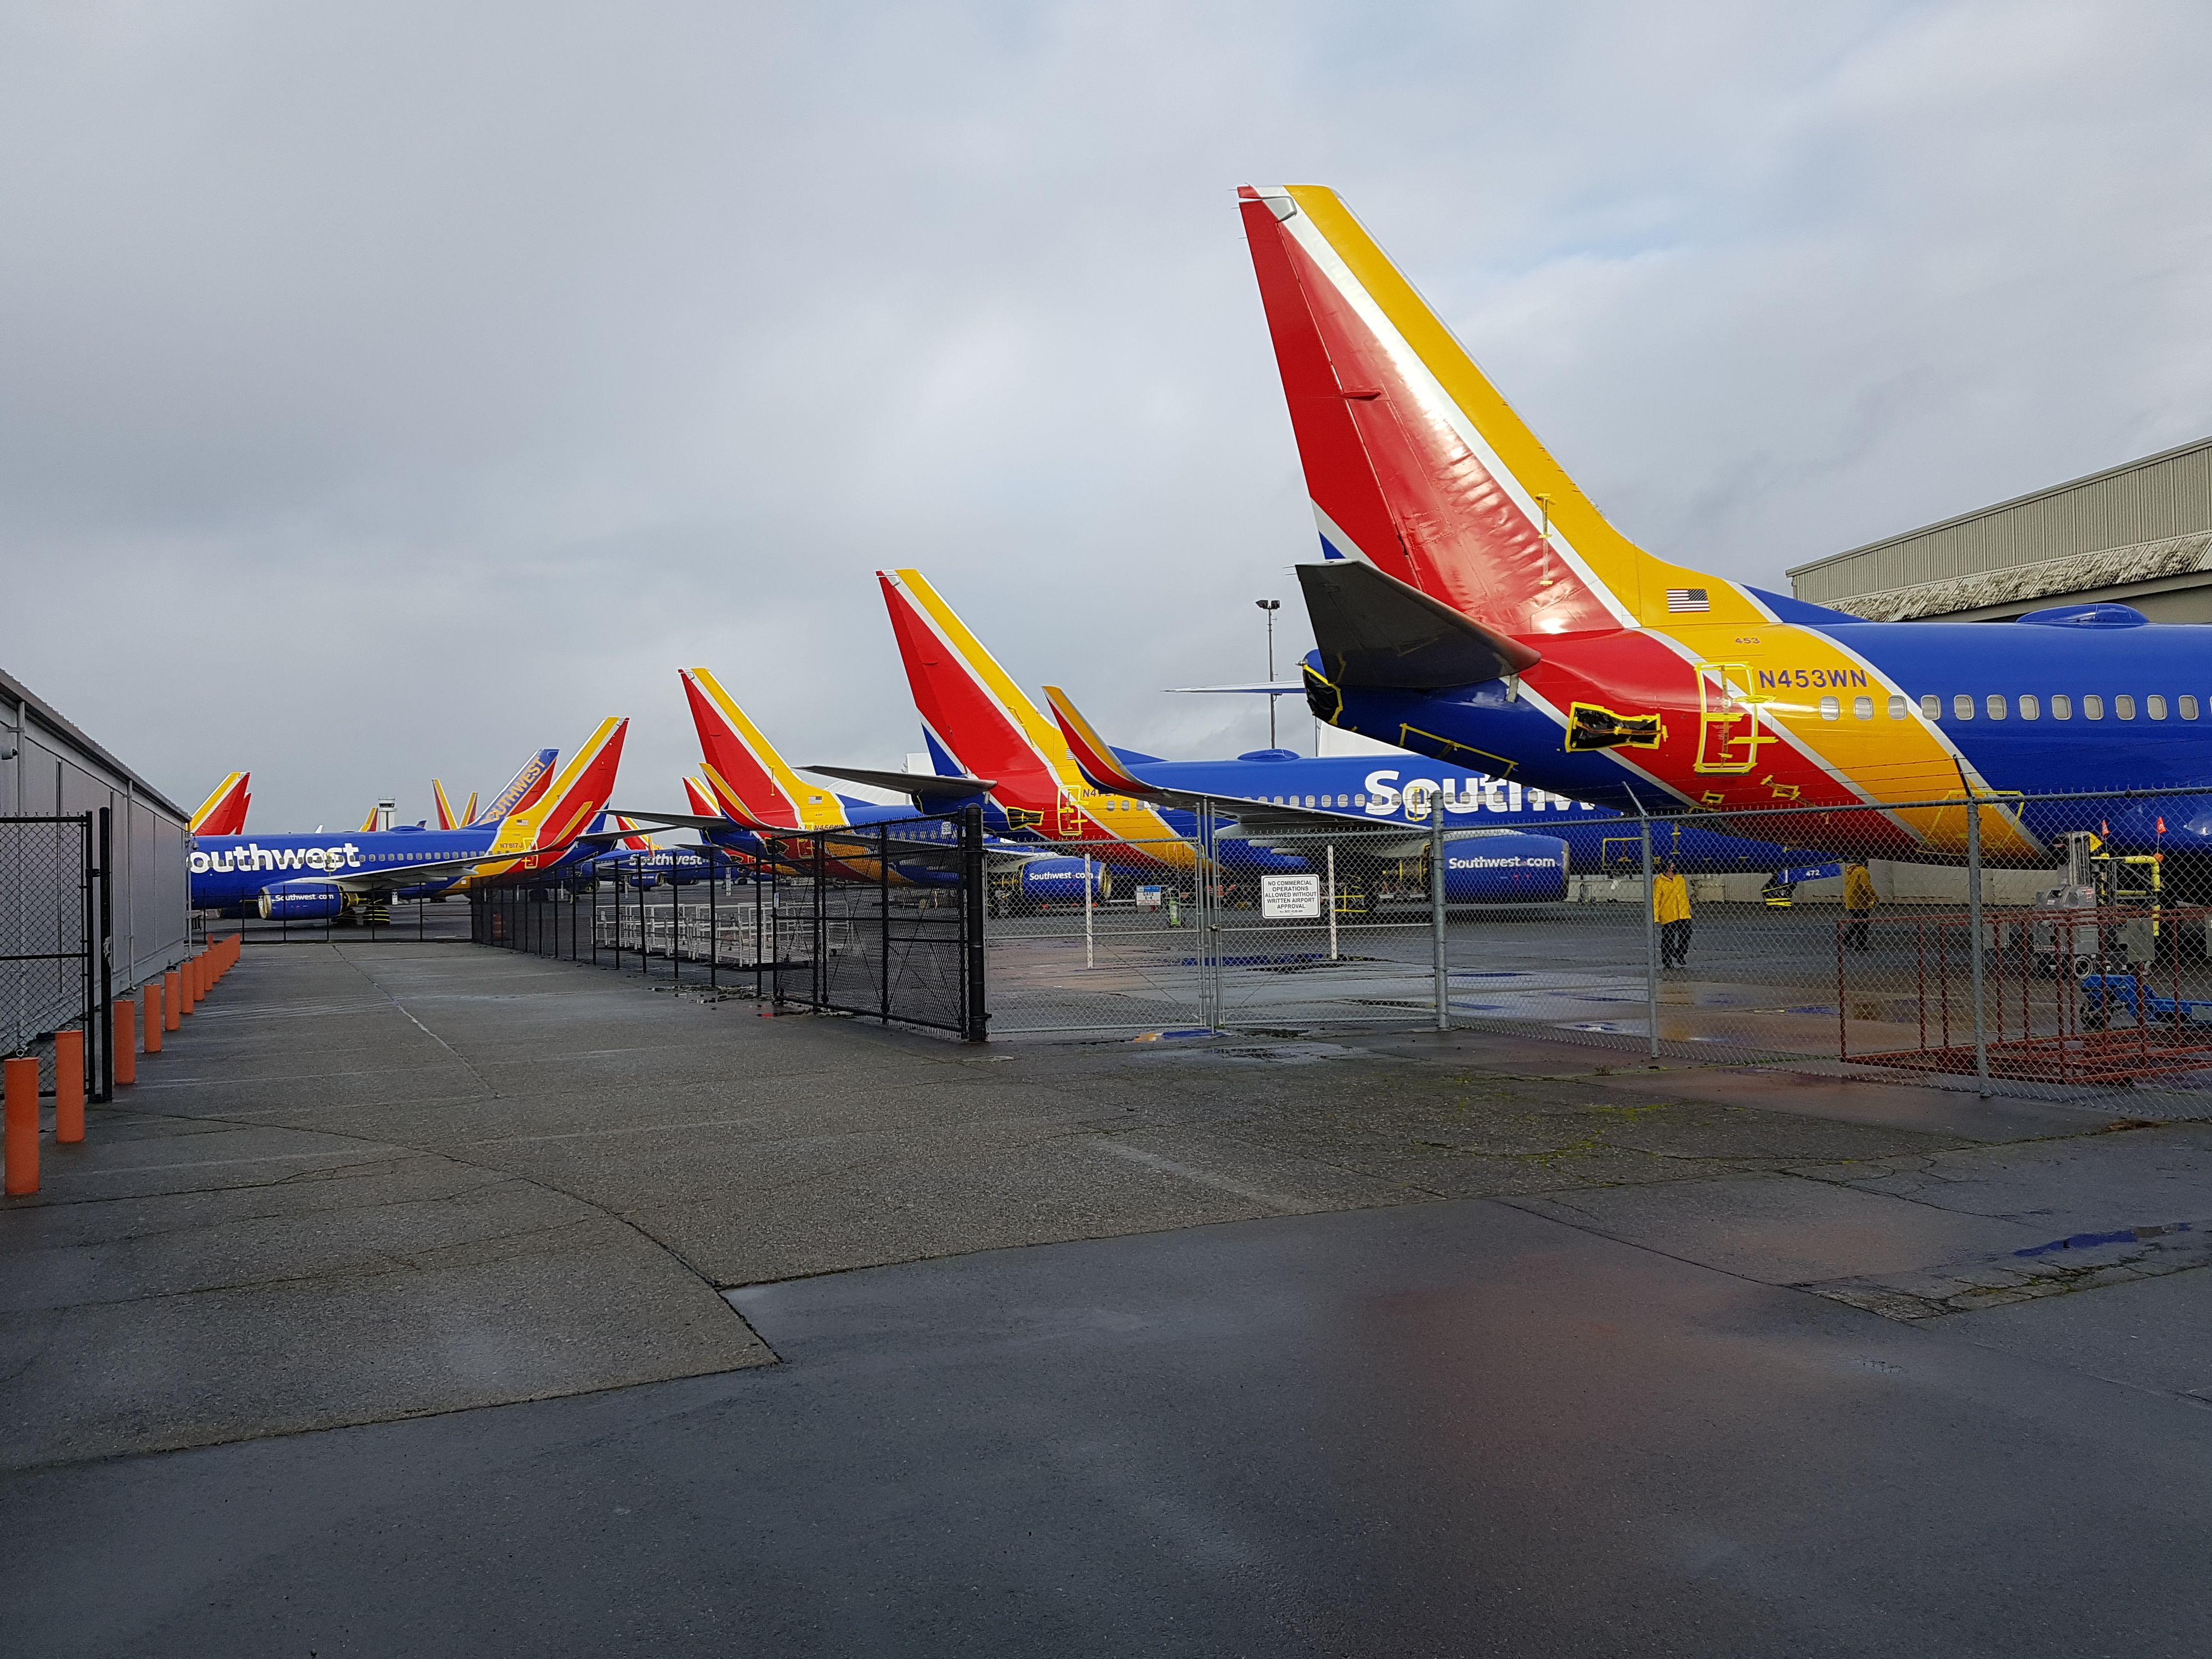 Everett, WA USA - Dec 17 2020: Southwest Airlines 737 Fleet parked